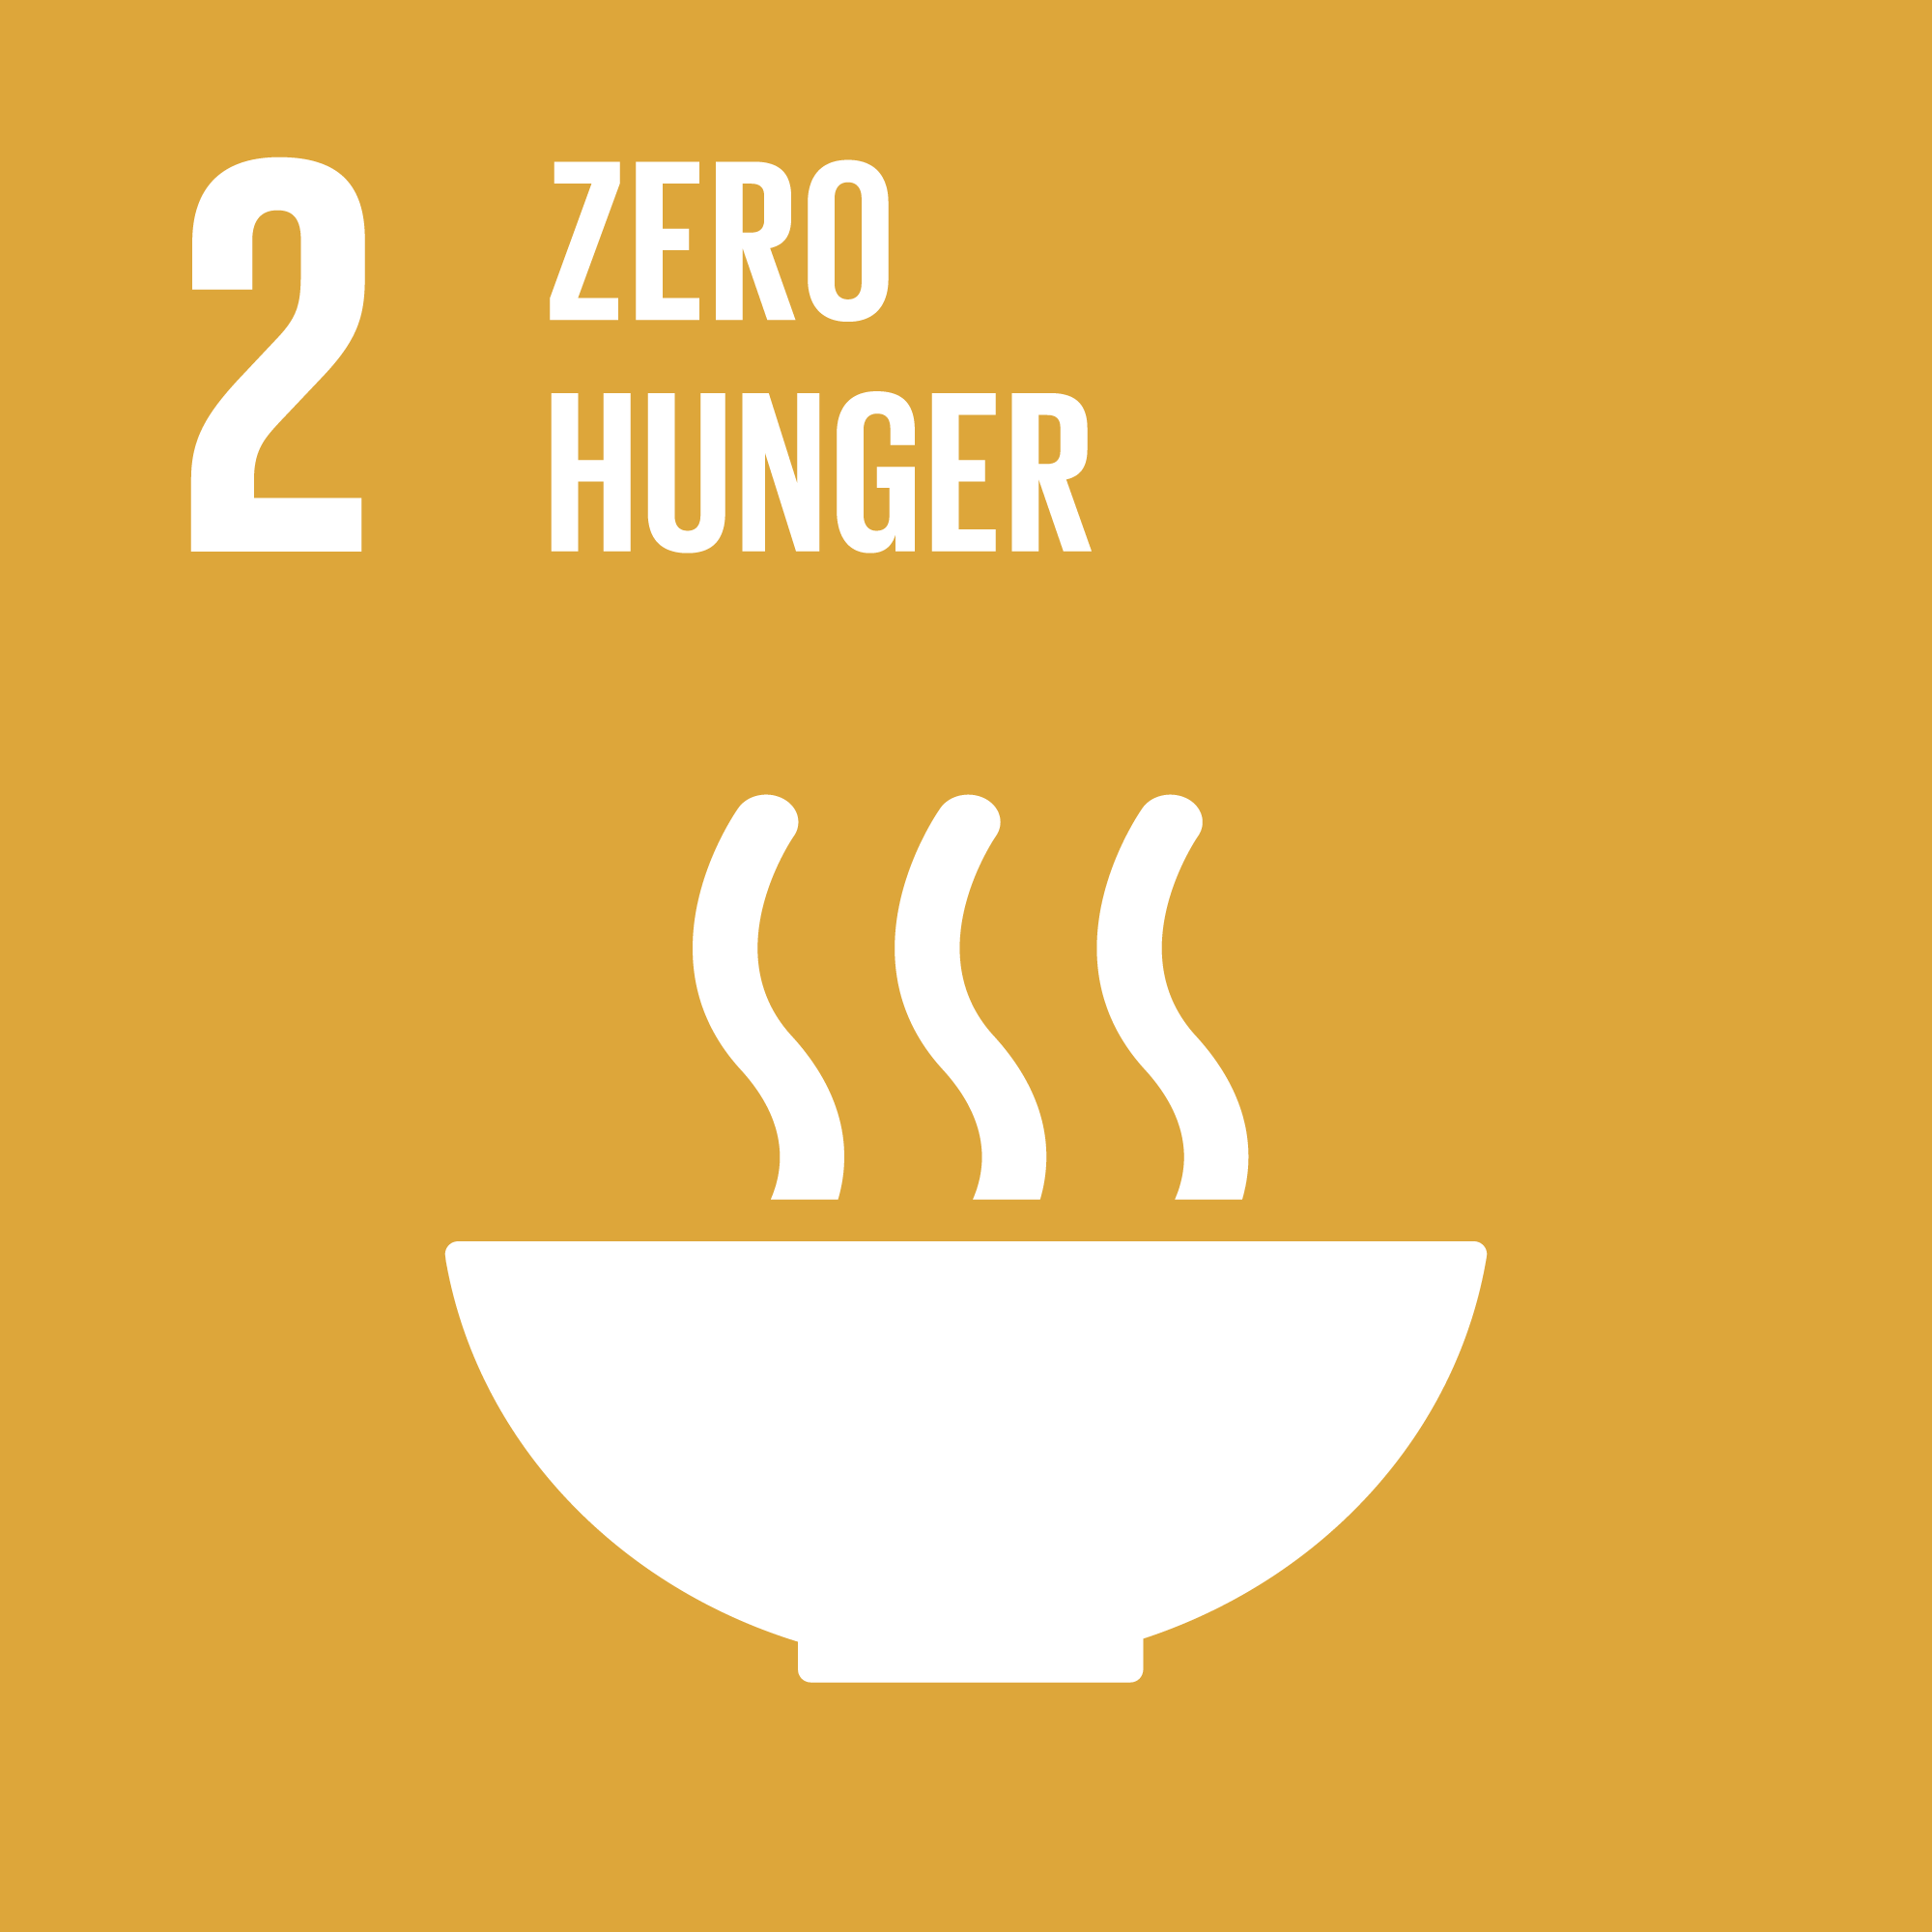 Sustainable Development Goal 2: Zero Hunger